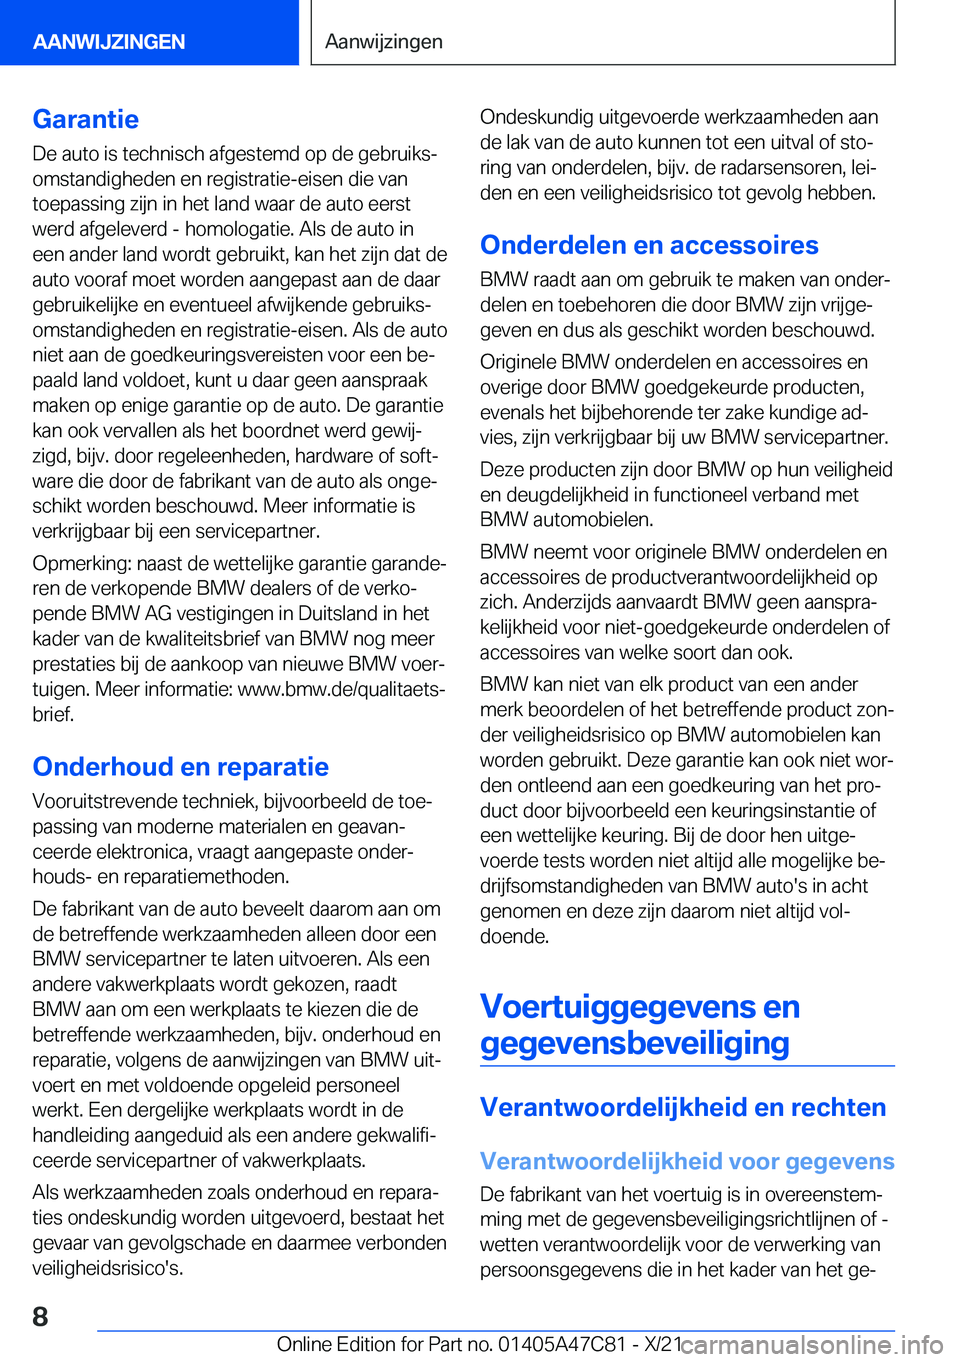 BMW X2 2022  Instructieboekjes (in Dutch) �G�a�r�a�n�t�i�e�D�e��a�u�t�o��i�s��t�e�c�h�n�i�s�c�h��a�f�g�e�s�t�e�m�d��o�p��d�e��g�e�b�r�u�i�k�sj
�o�m�s�t�a�n�d�i�g�h�e�d�e�n��e�n��r�e�g�i�s�t�r�a�t�i�e�-�e�i�s�e�n��d�i�e��v�a�n �t�o